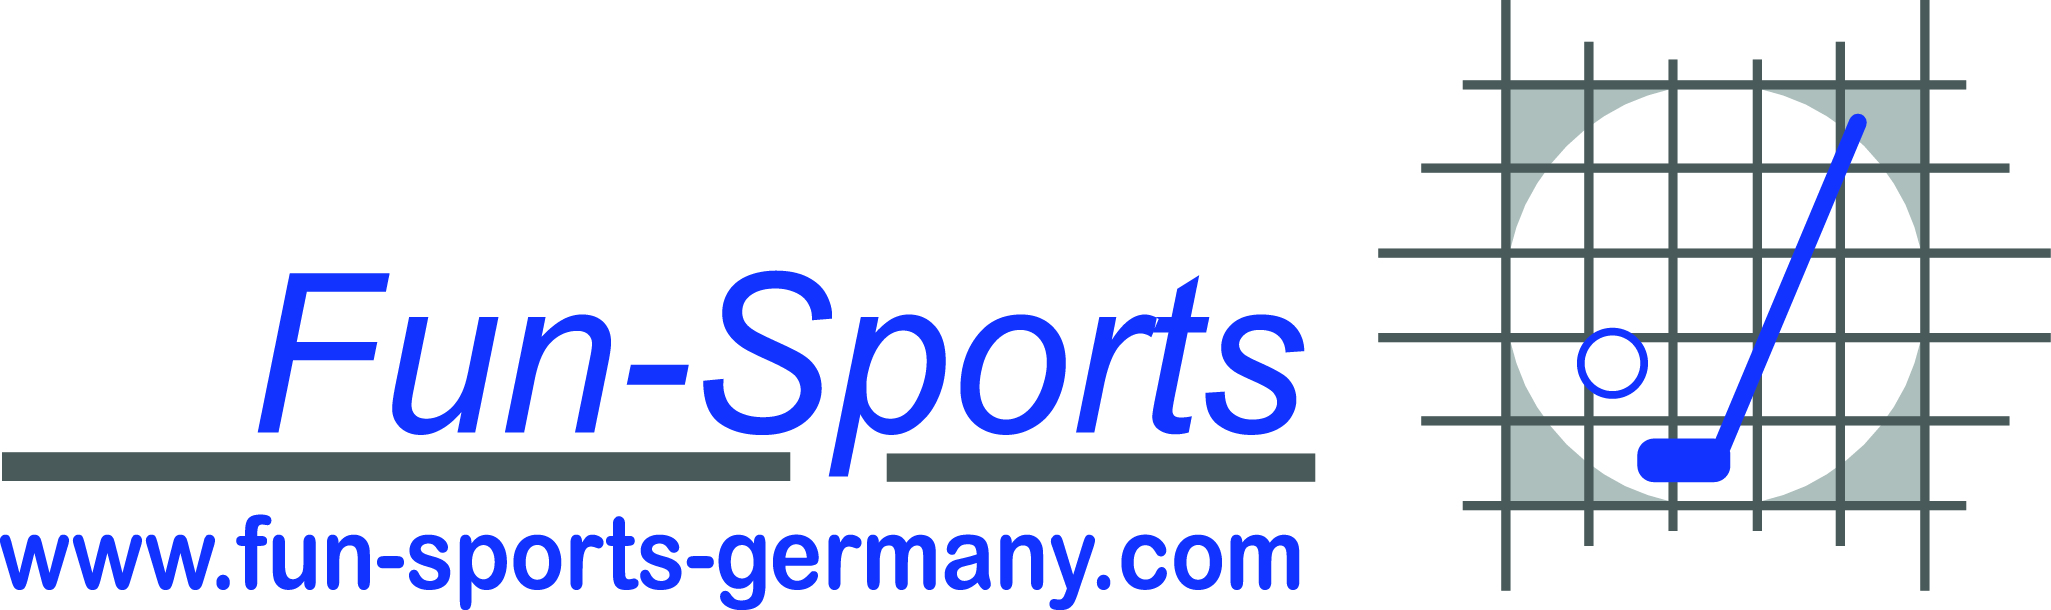 Fun-Spors-Germany.com